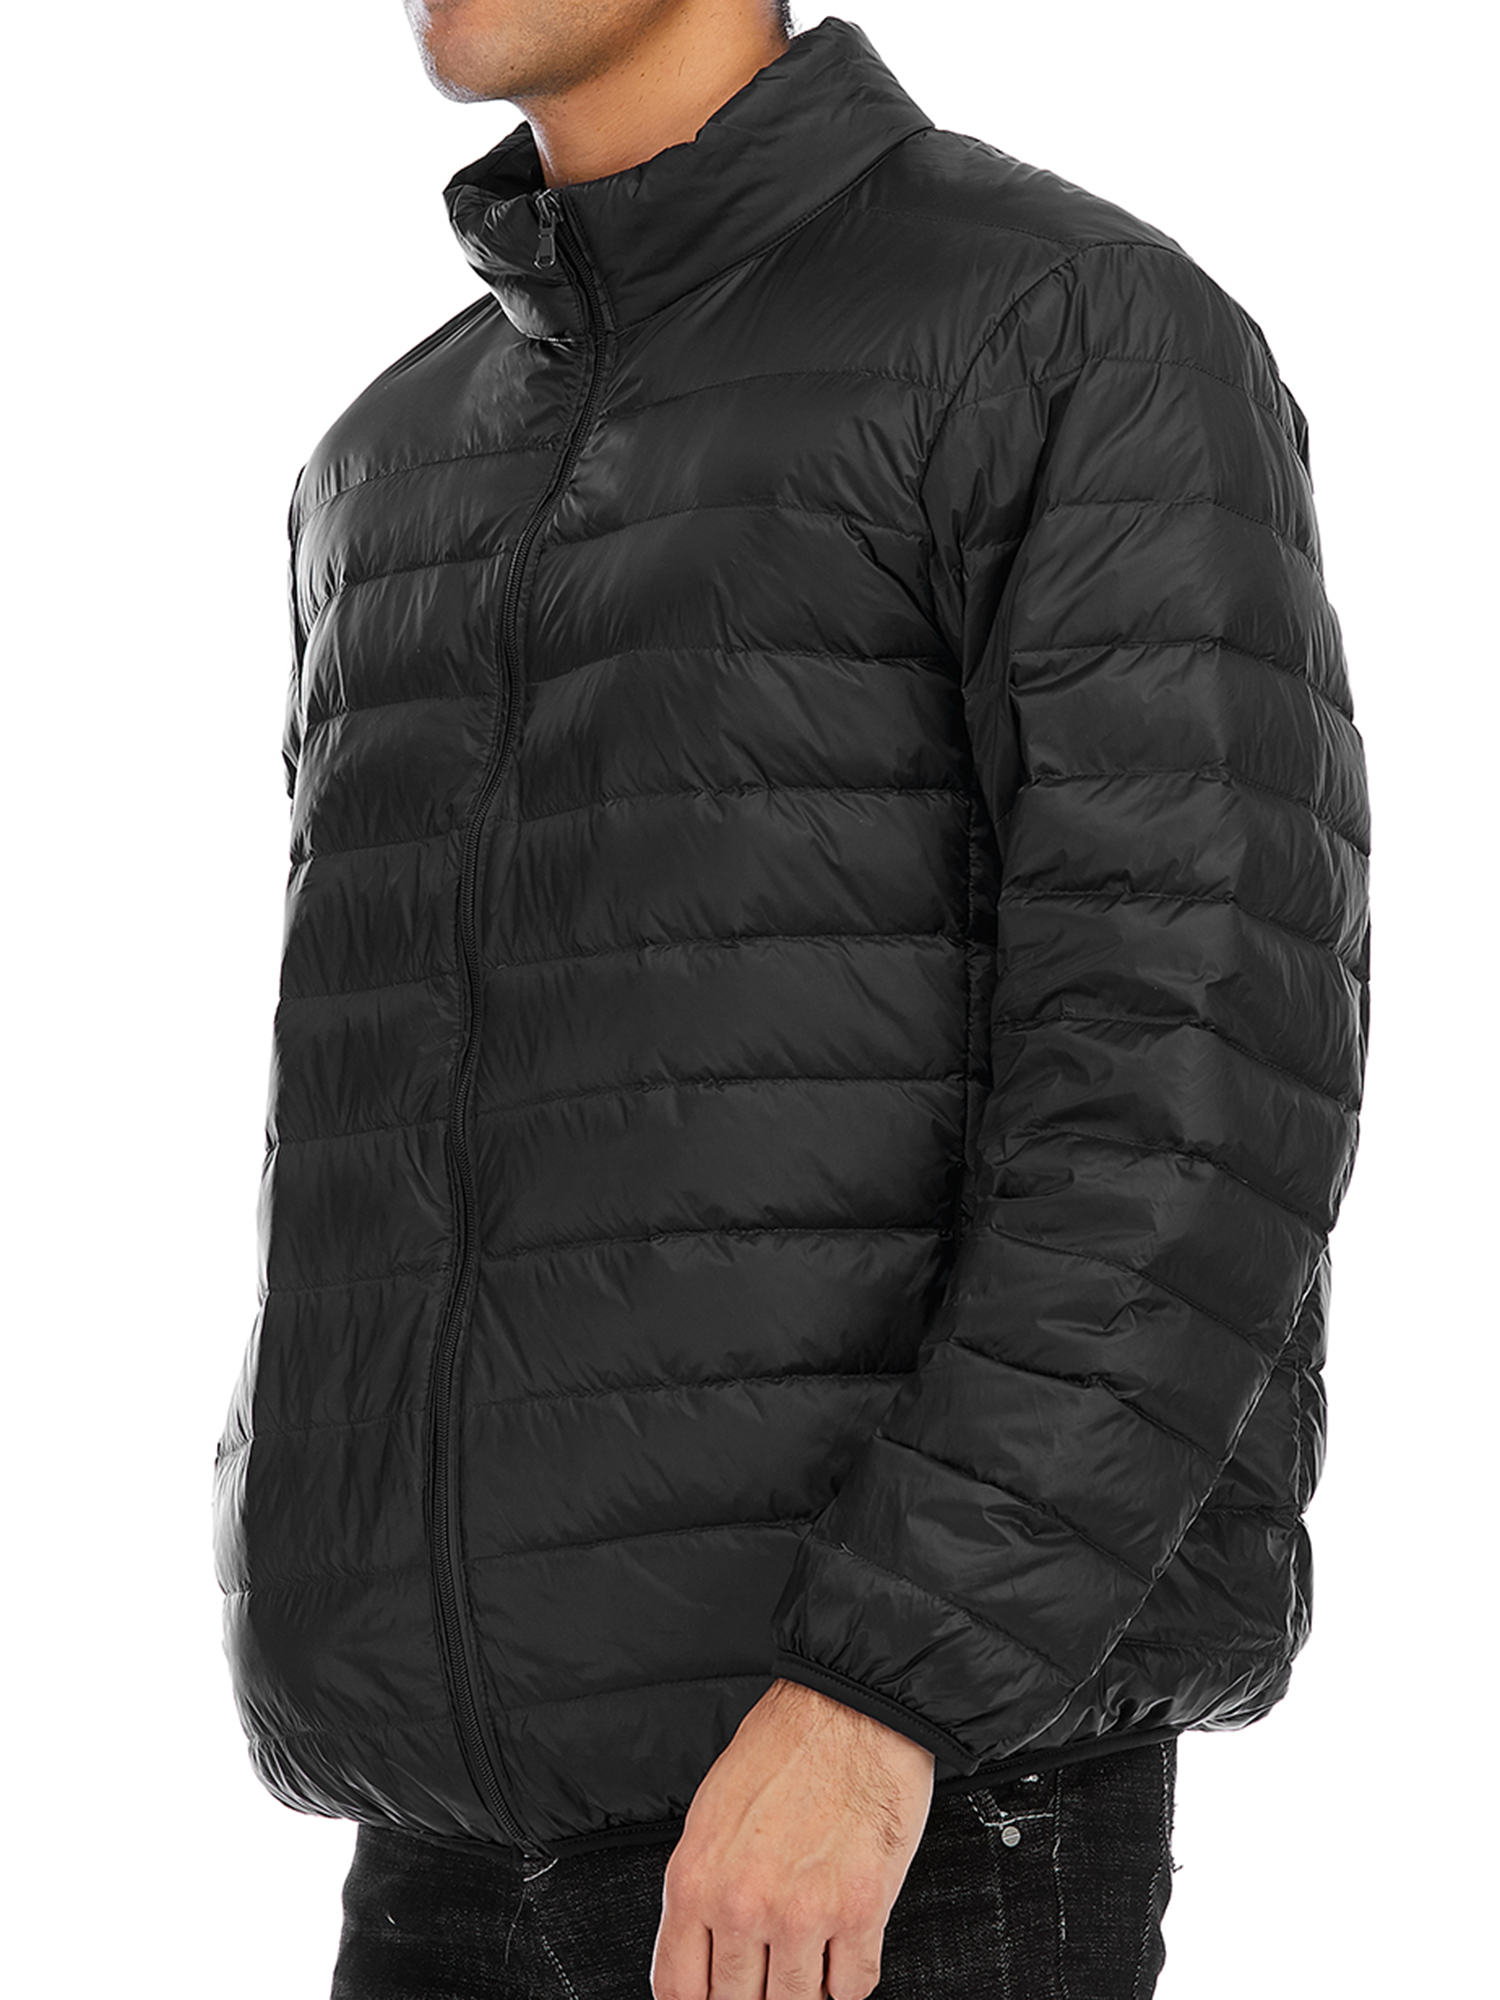 FOCUSSEXY Men Down Jacket Outwear Winter Outerwear Zip Up Windbreaker Lightweight Winter Jackets Casual Zip Up Puffer Coats Packable Puffer Jacket, Black - image 1 of 7